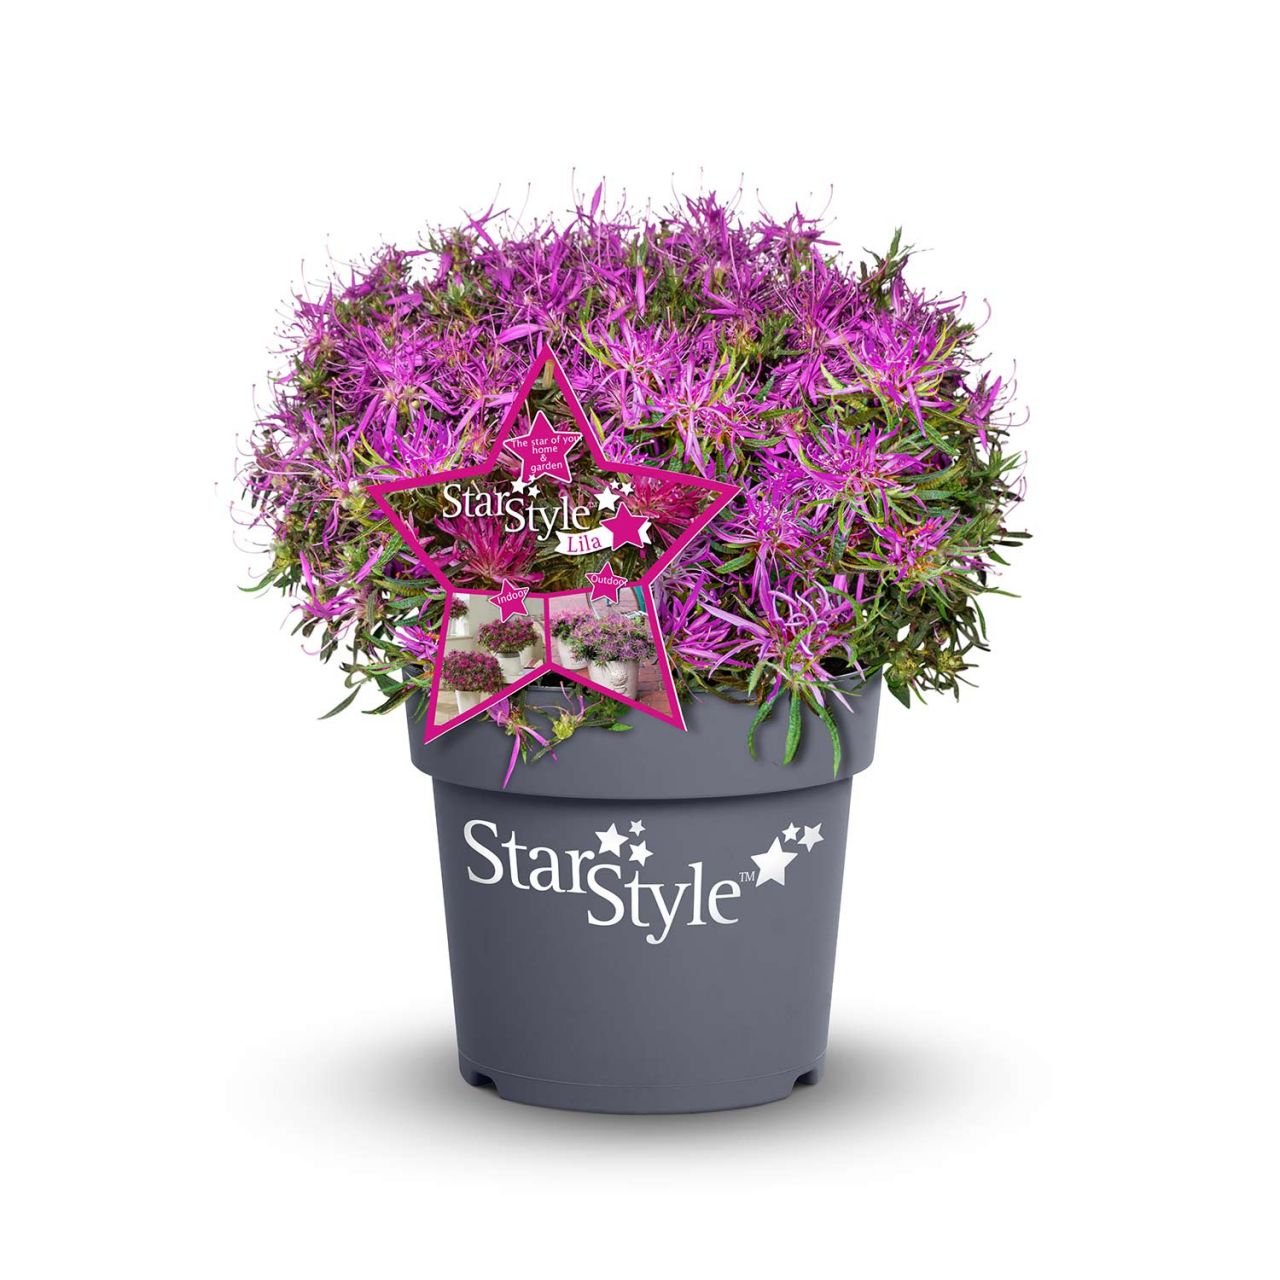 Kategorie <b>Azaleen </b> - Japanische Azalee 'StarStyle® Lila' - Rhododendron obtusum 'StarStyle Lila'